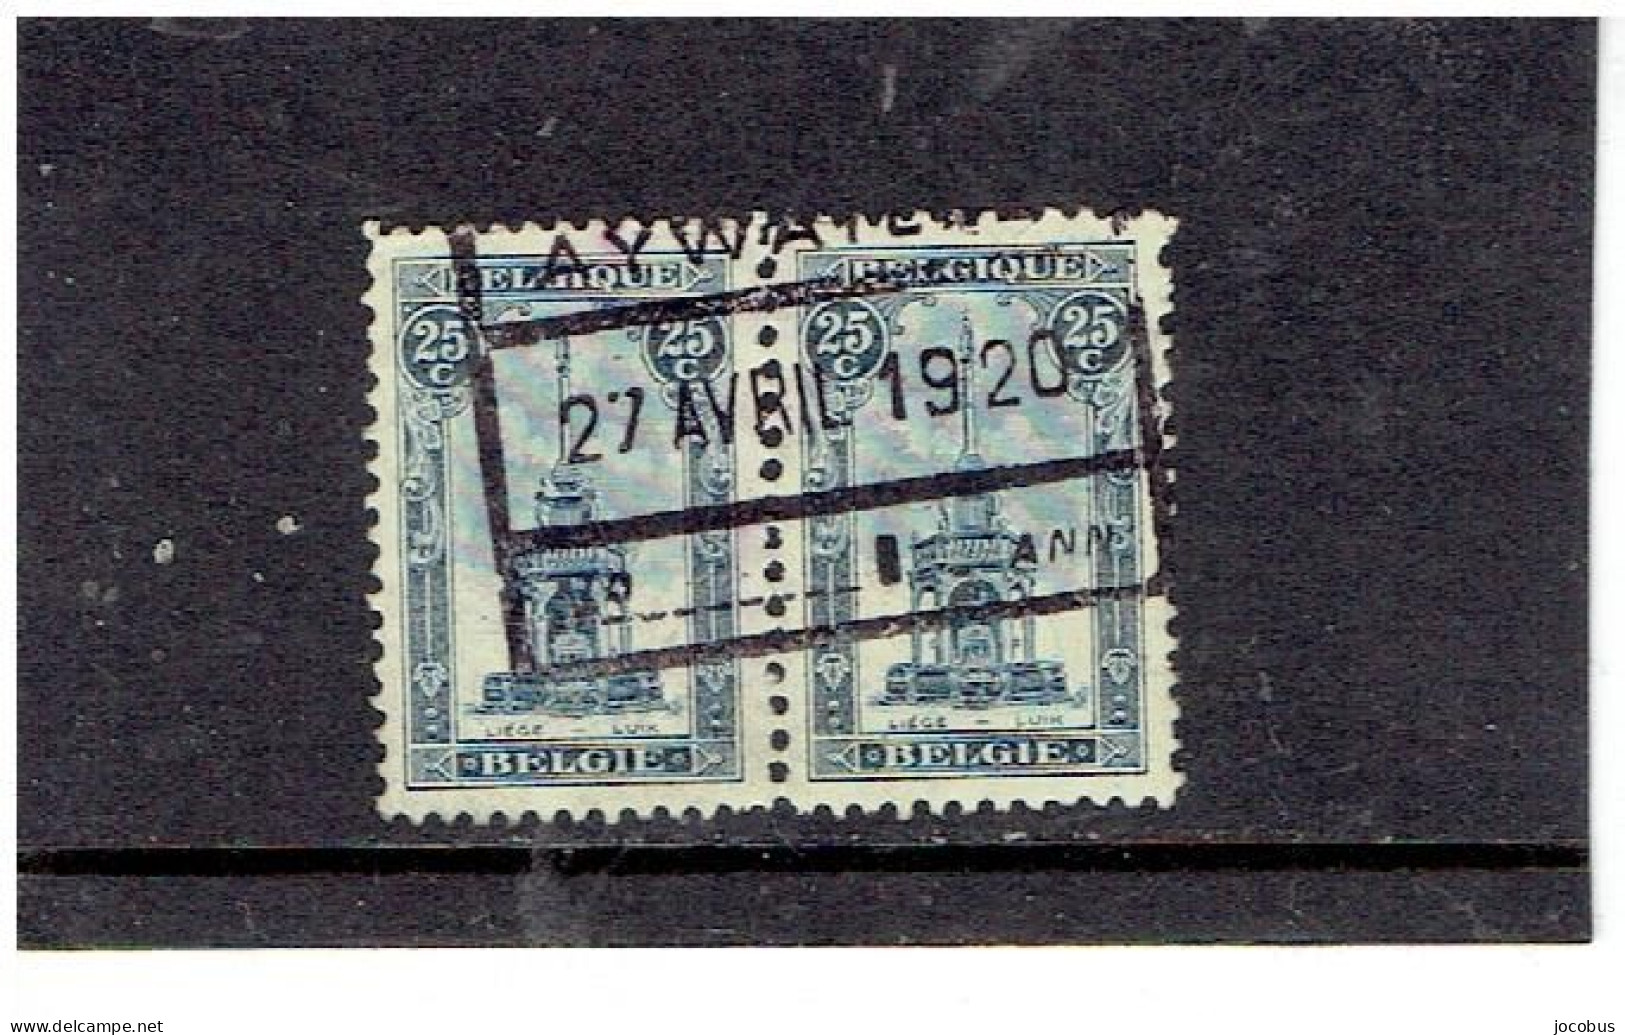 Paire Du Nr 164  OBLITERATION CHEMIN DE FER  AYWAILLE 27/4/1920  RARISSIME - Used Stamps